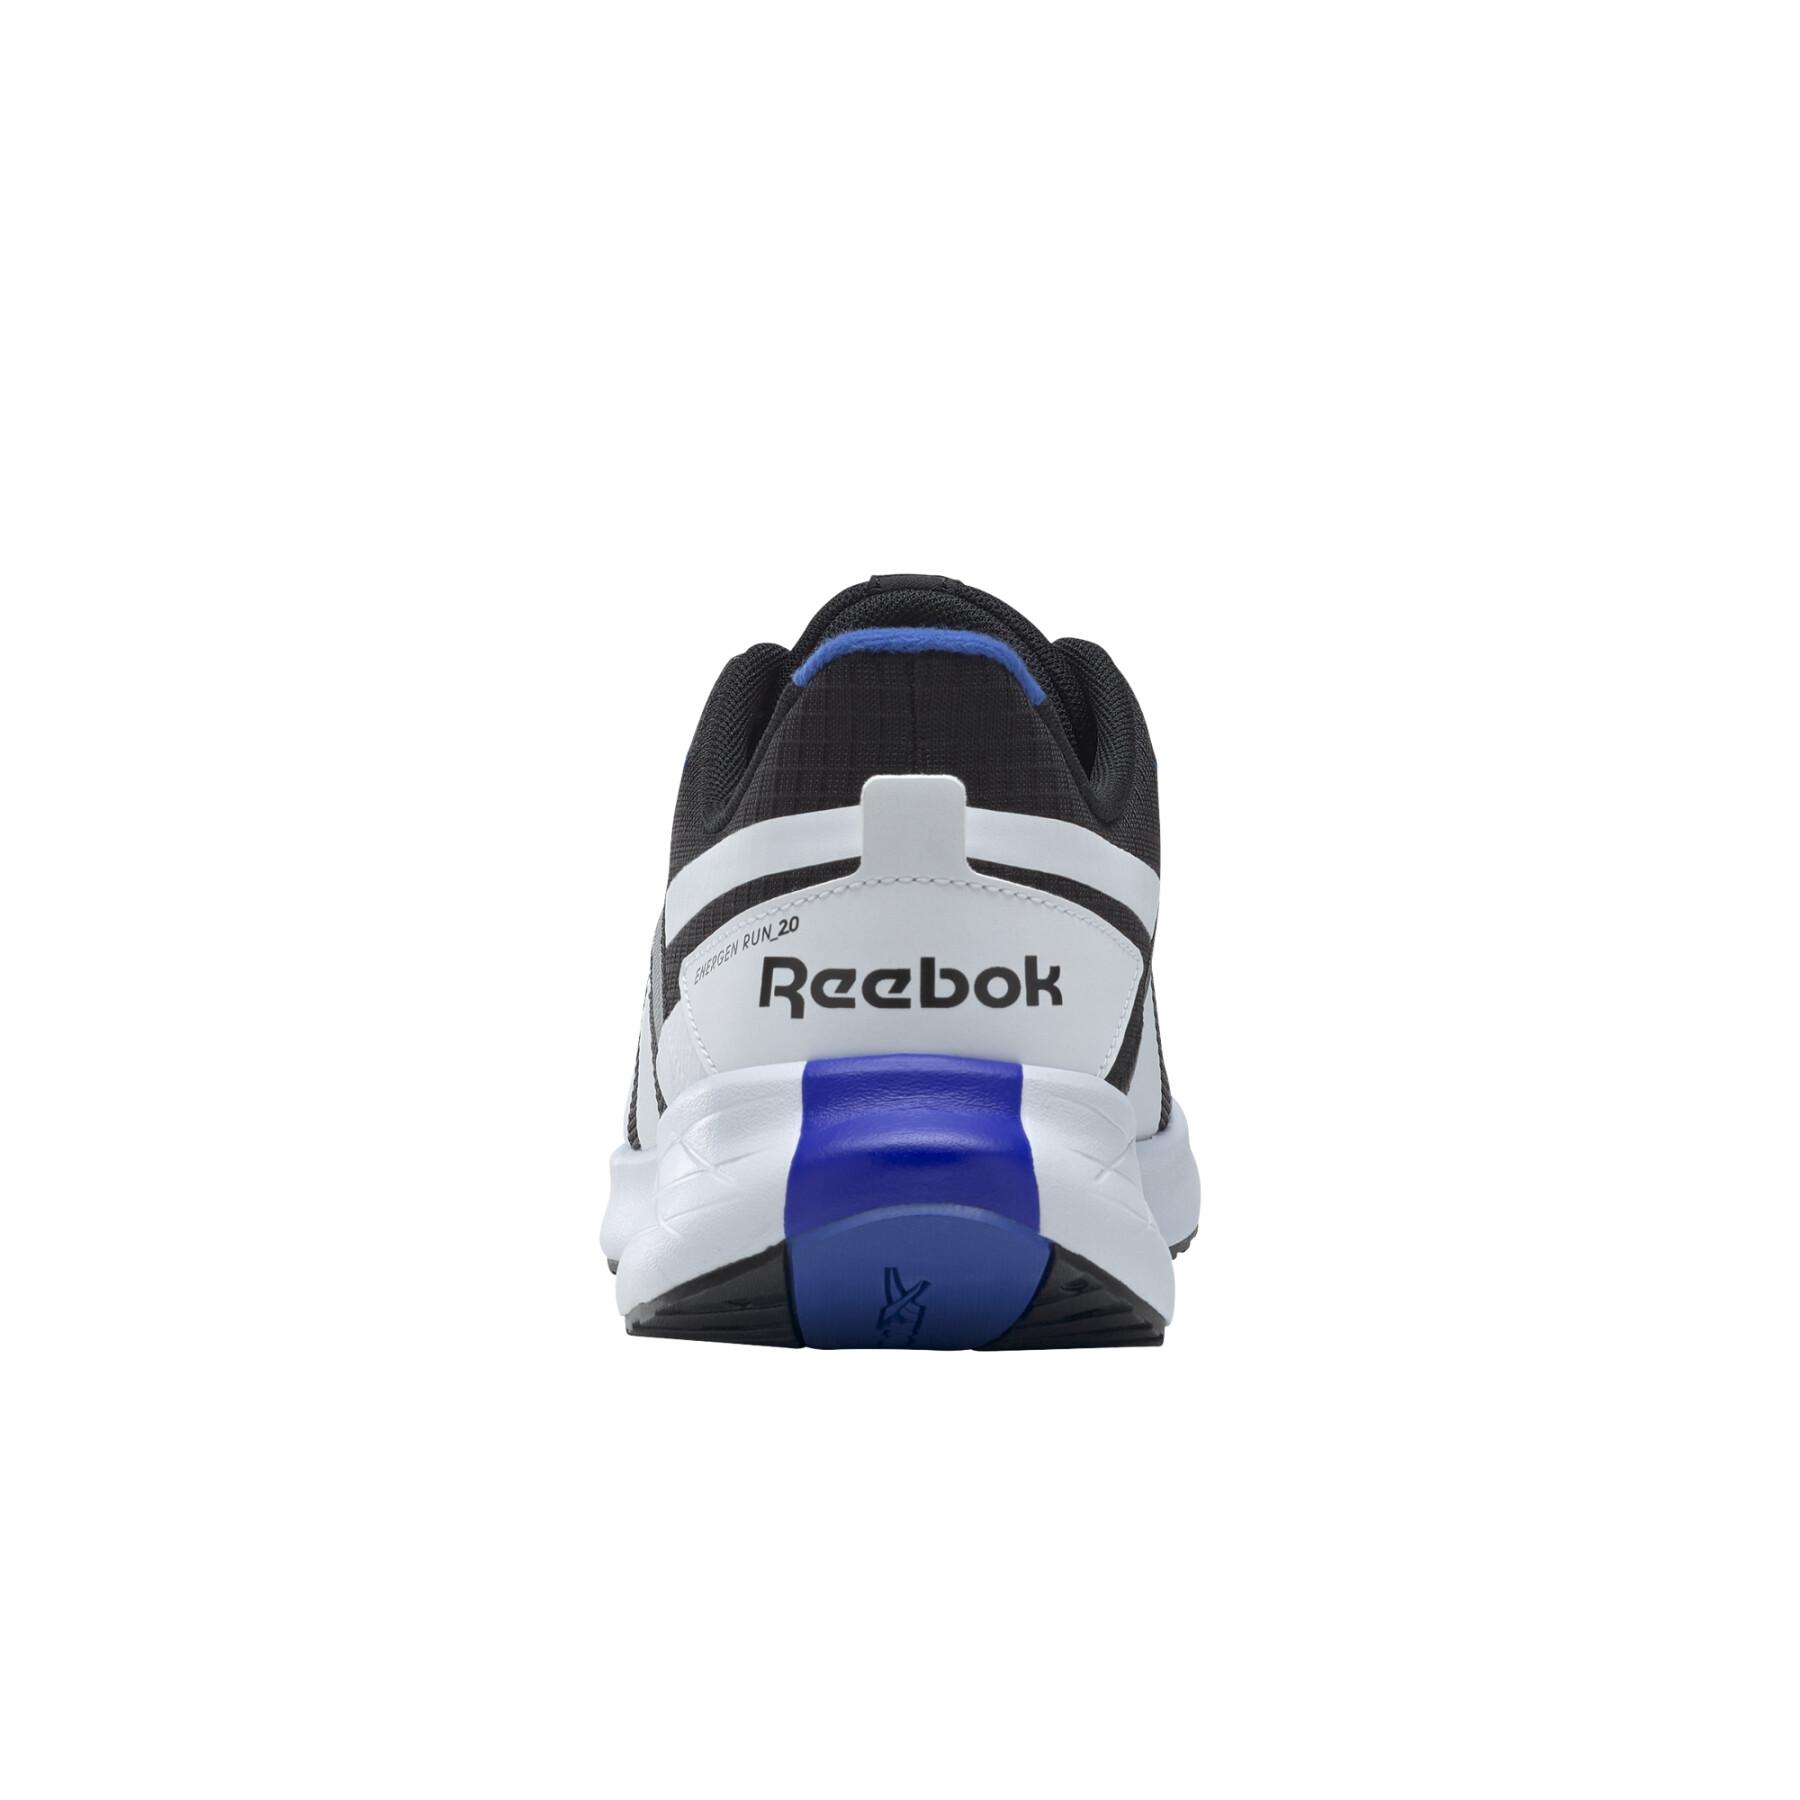 Schuhe Reebok Energen Run 2